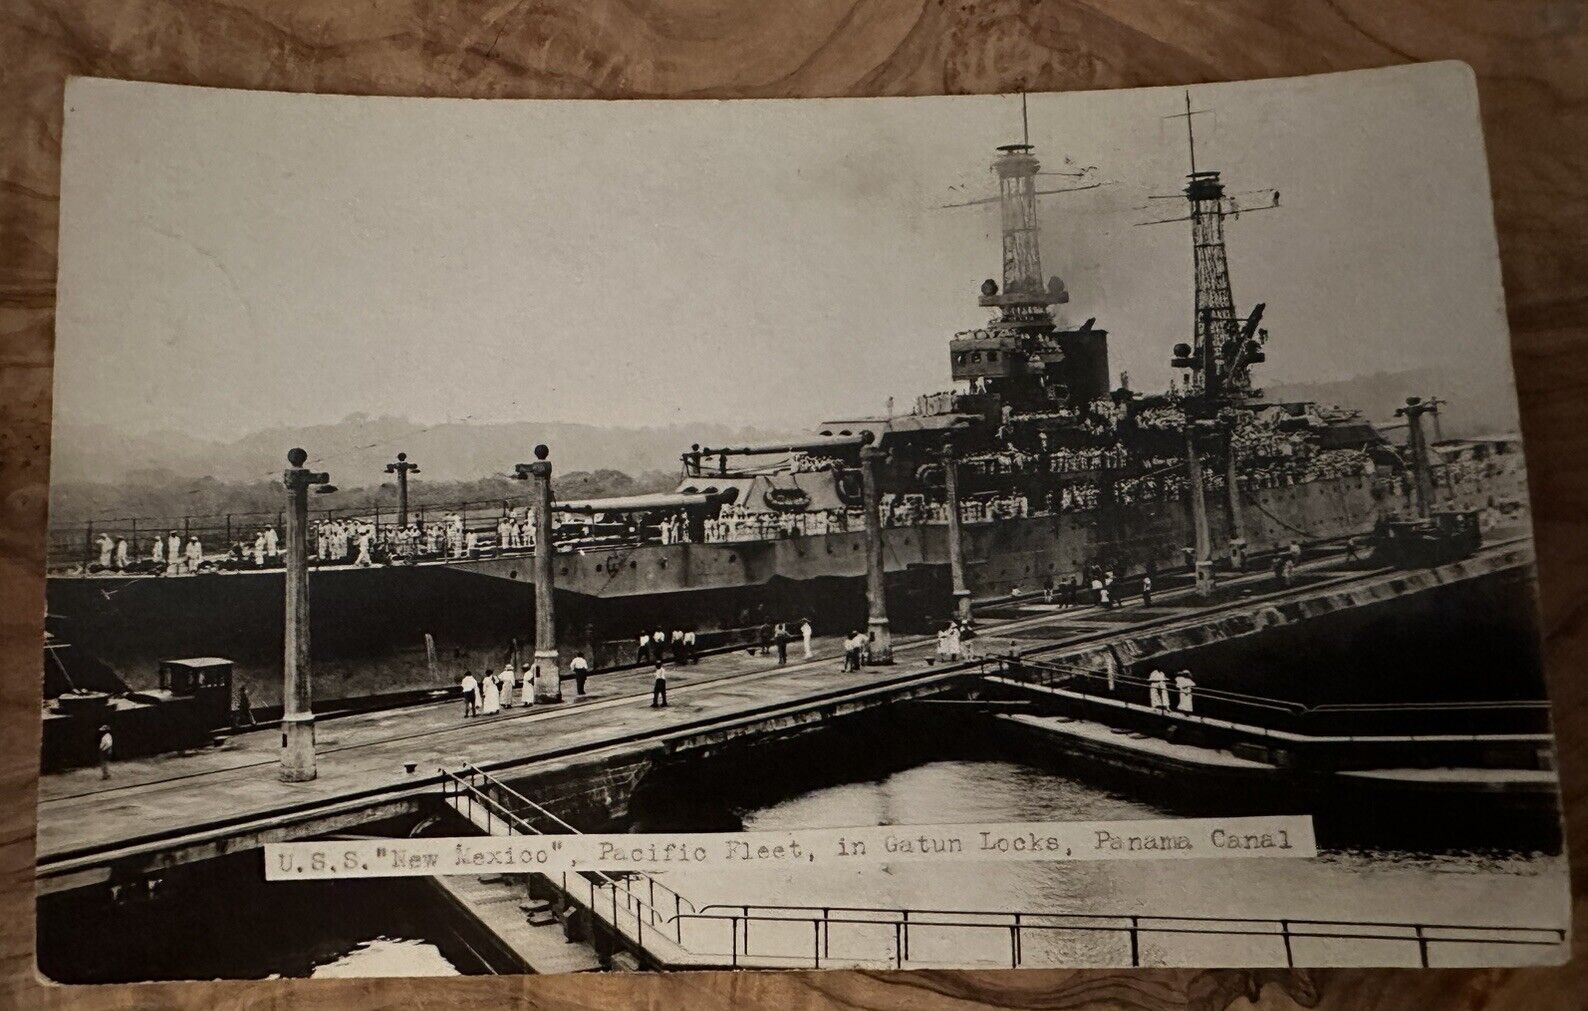 Antique Postcard U.S.S. “New Mexico”, Pacific Fleet Gutan Locks Panama Canal